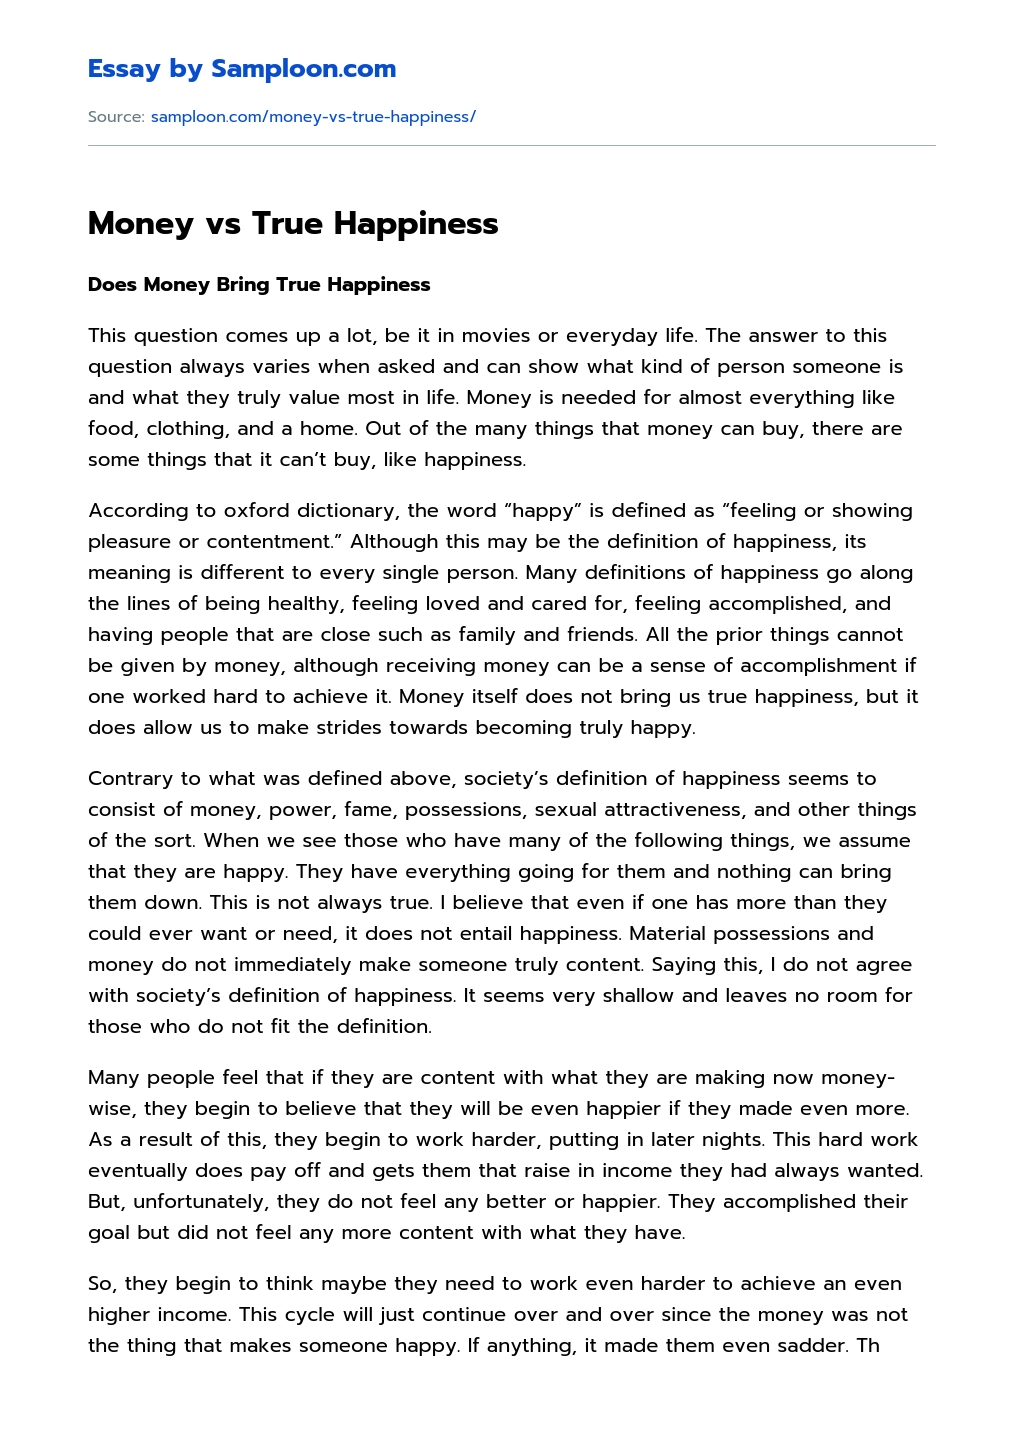 Money vs True Happiness essay